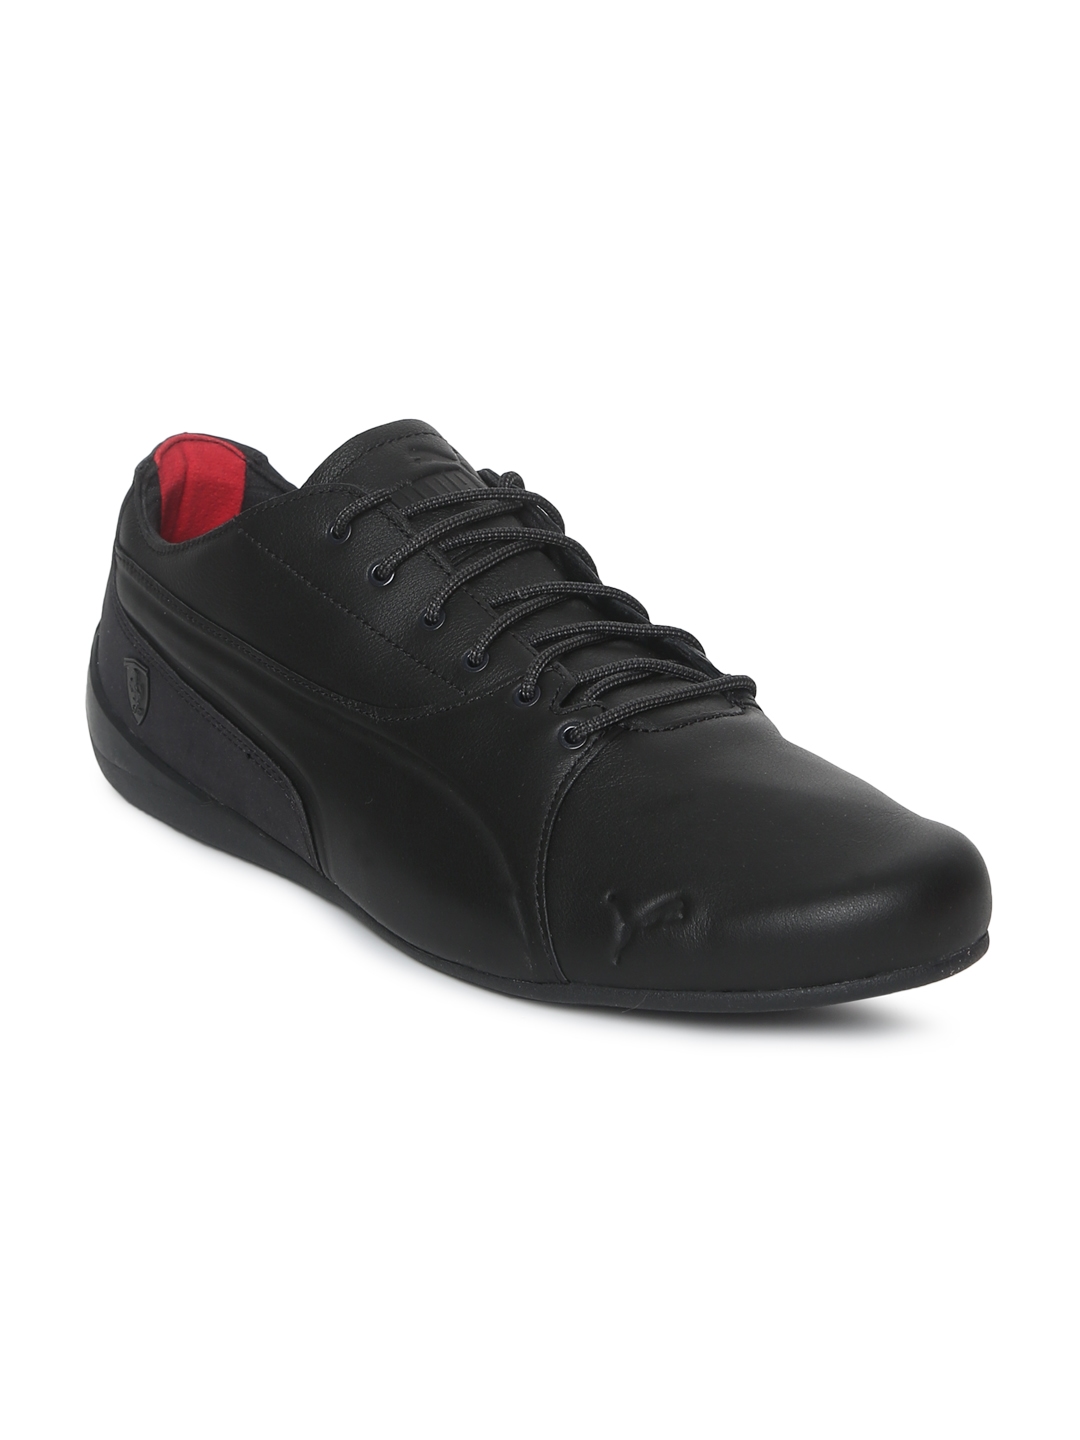 Buy PUMA Motorsport Men Black SF 7 Sneakers - Casual Shoes Men 7141703 | Myntra